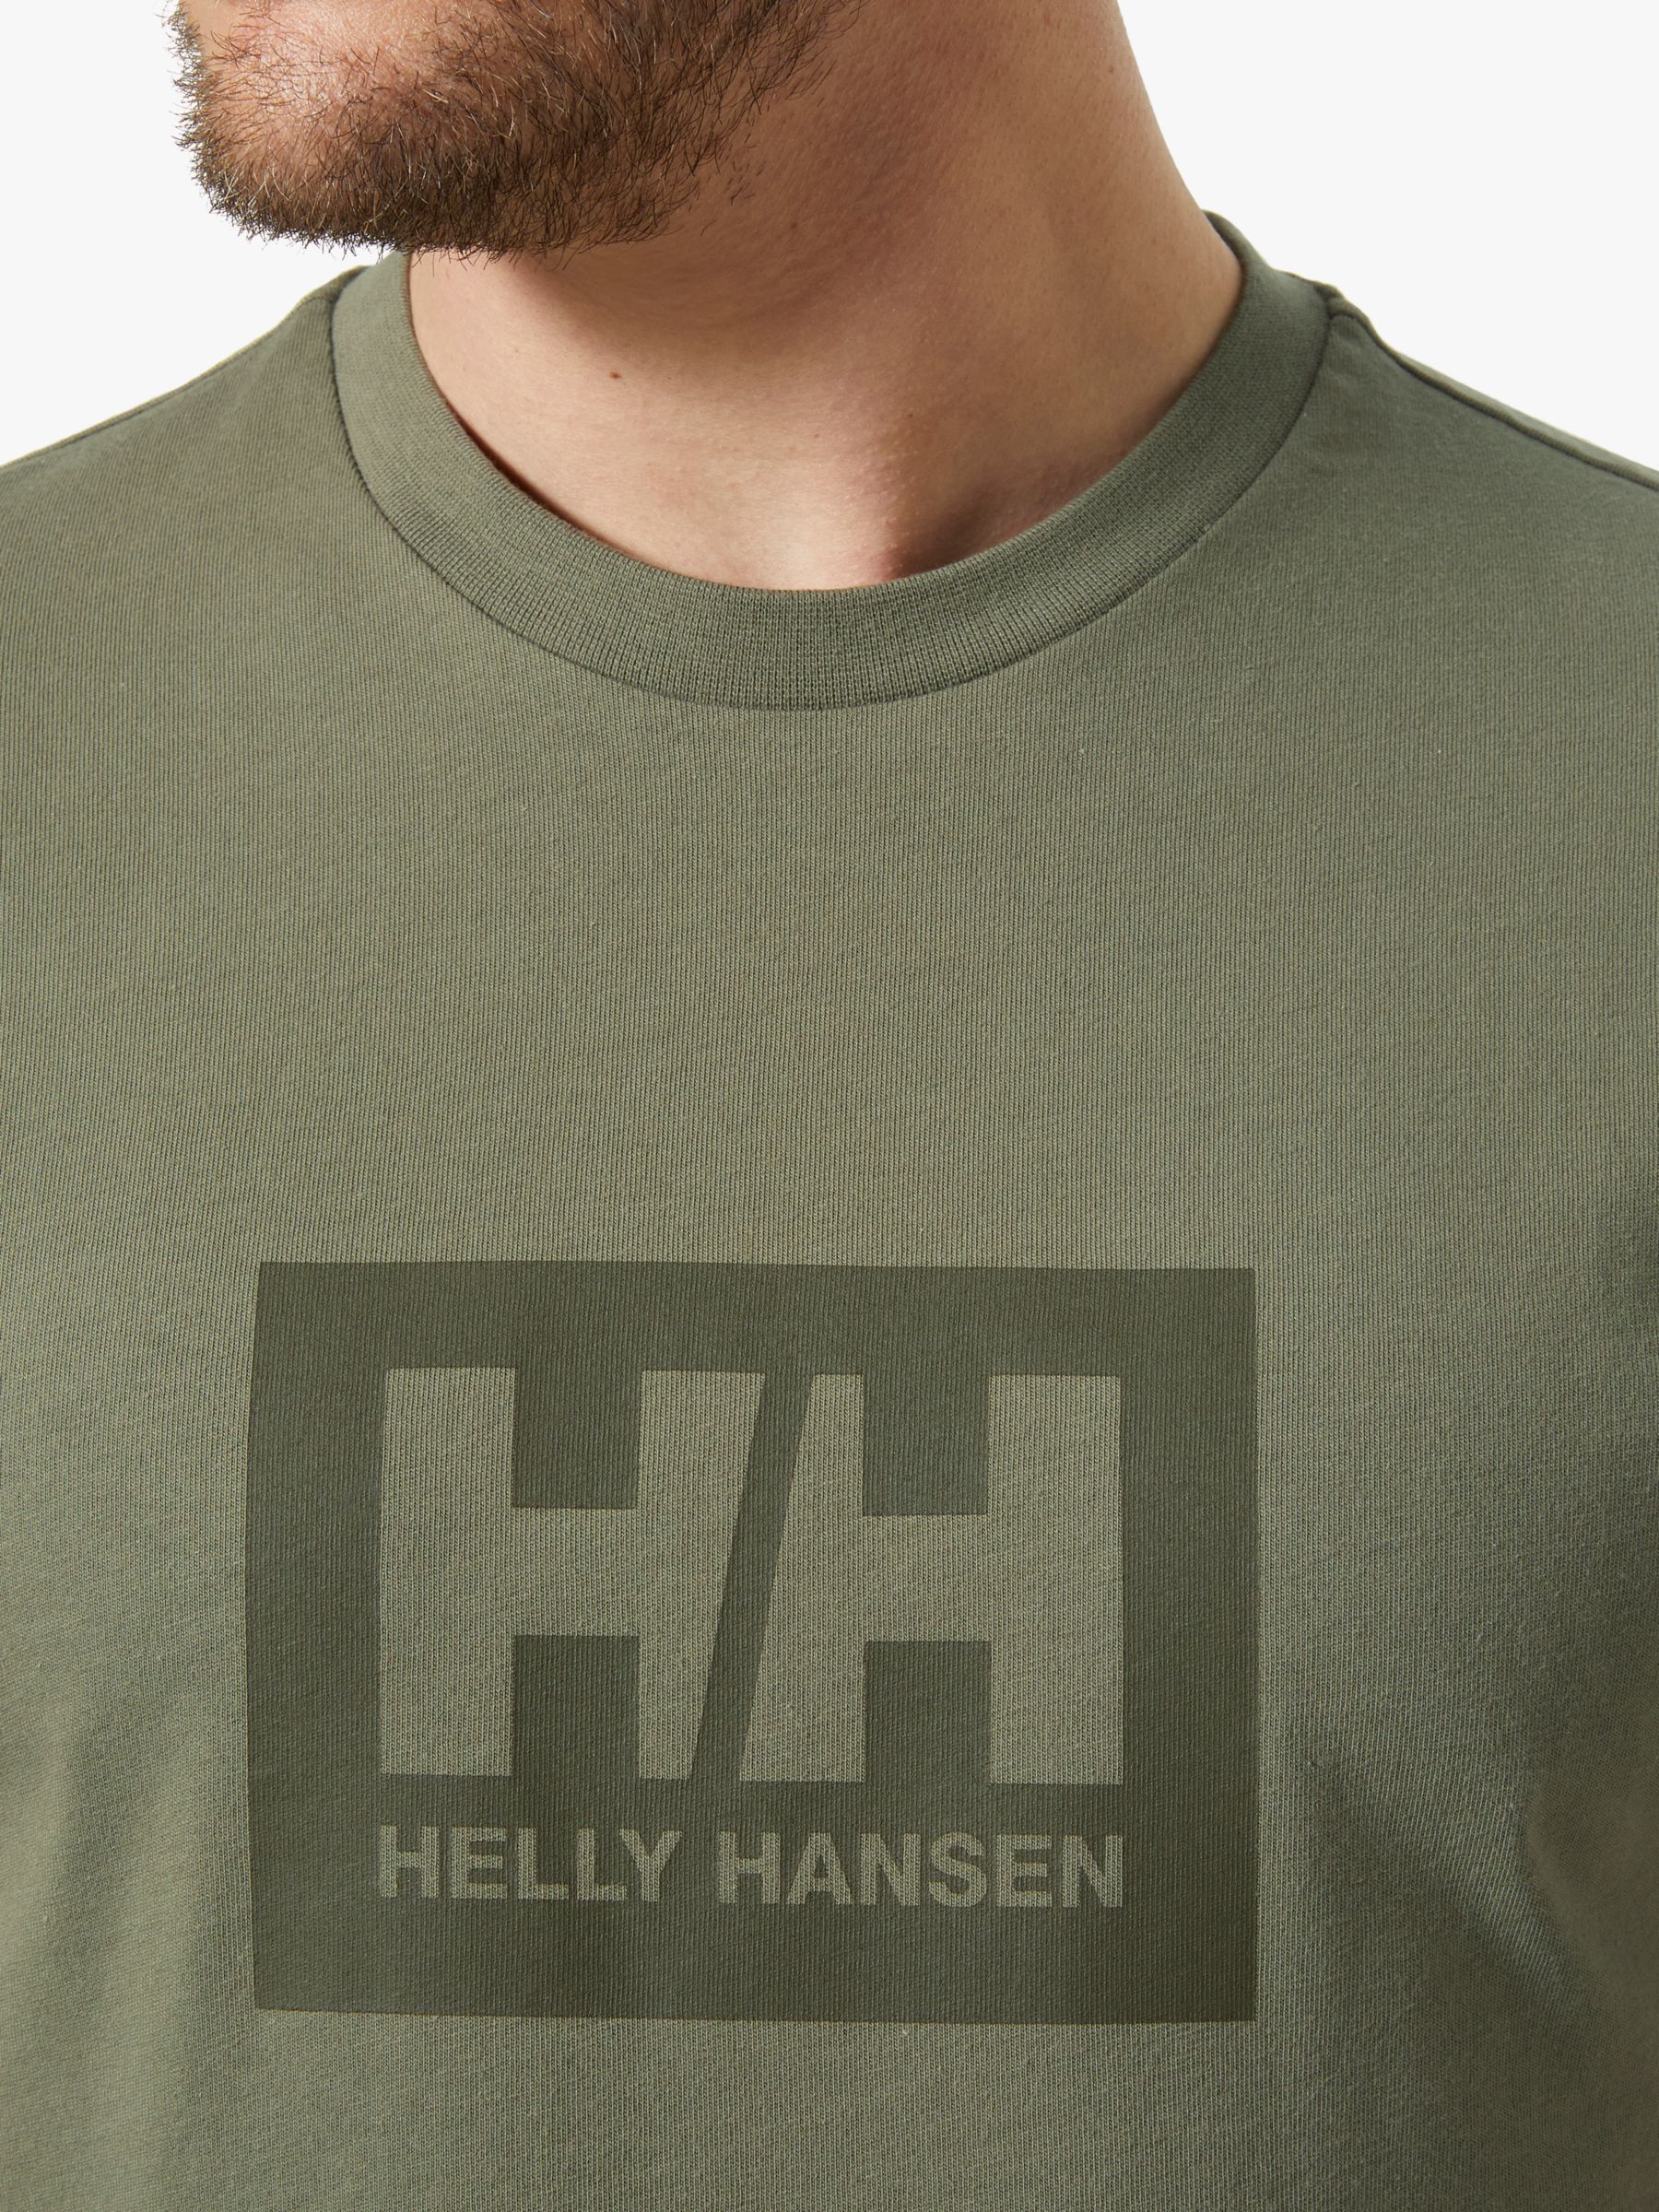 Helly Hansen Men's Box T-shirt, 422 Lav Green, M